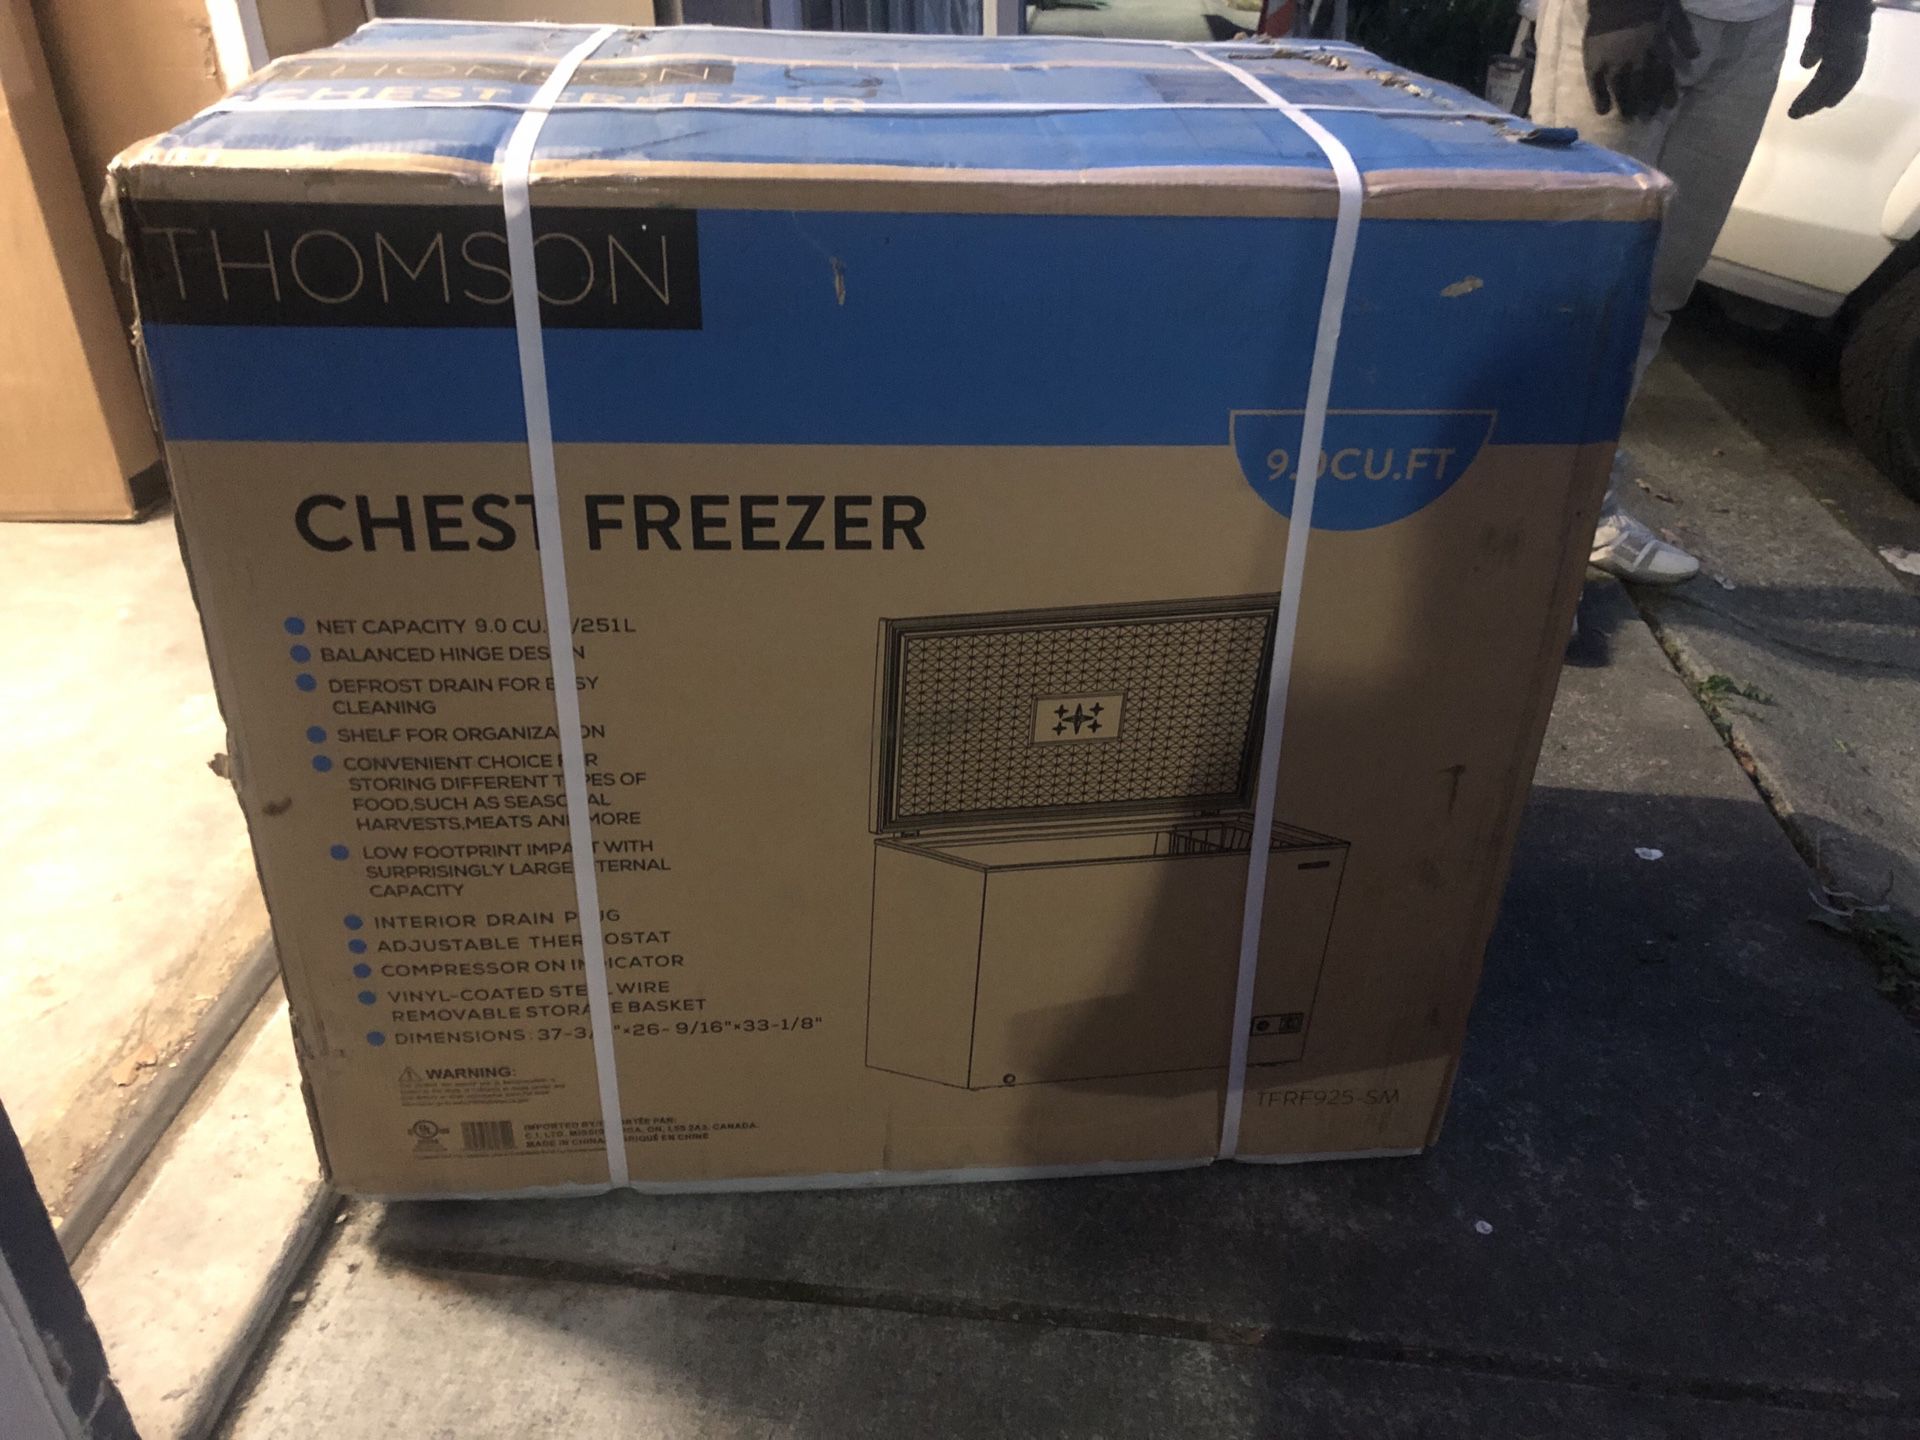 Thomson Chest Freezer 9.0 cu. ft. BRAND NEW IN BOX!